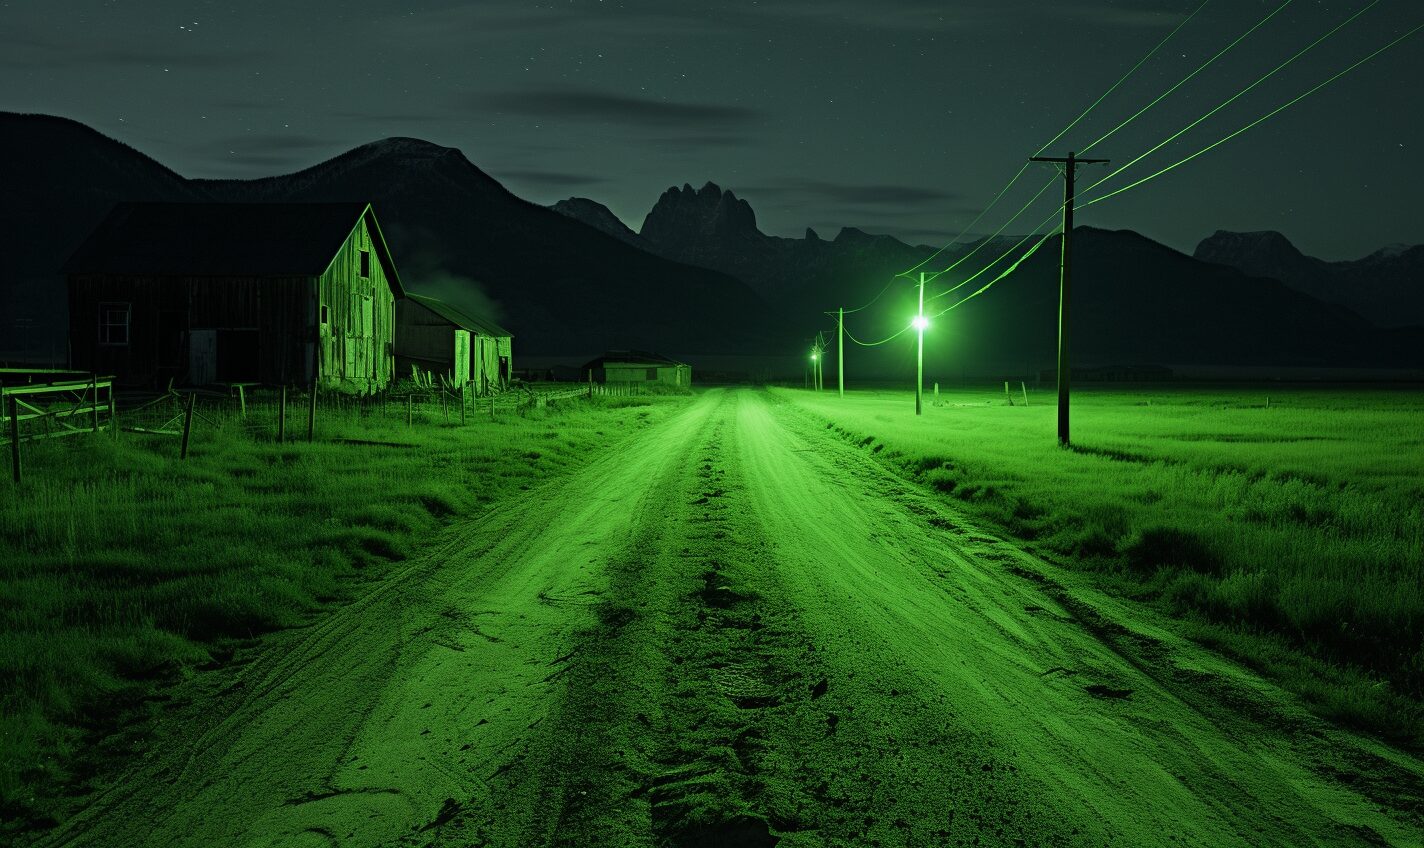 billings, montana in black and neon green glow